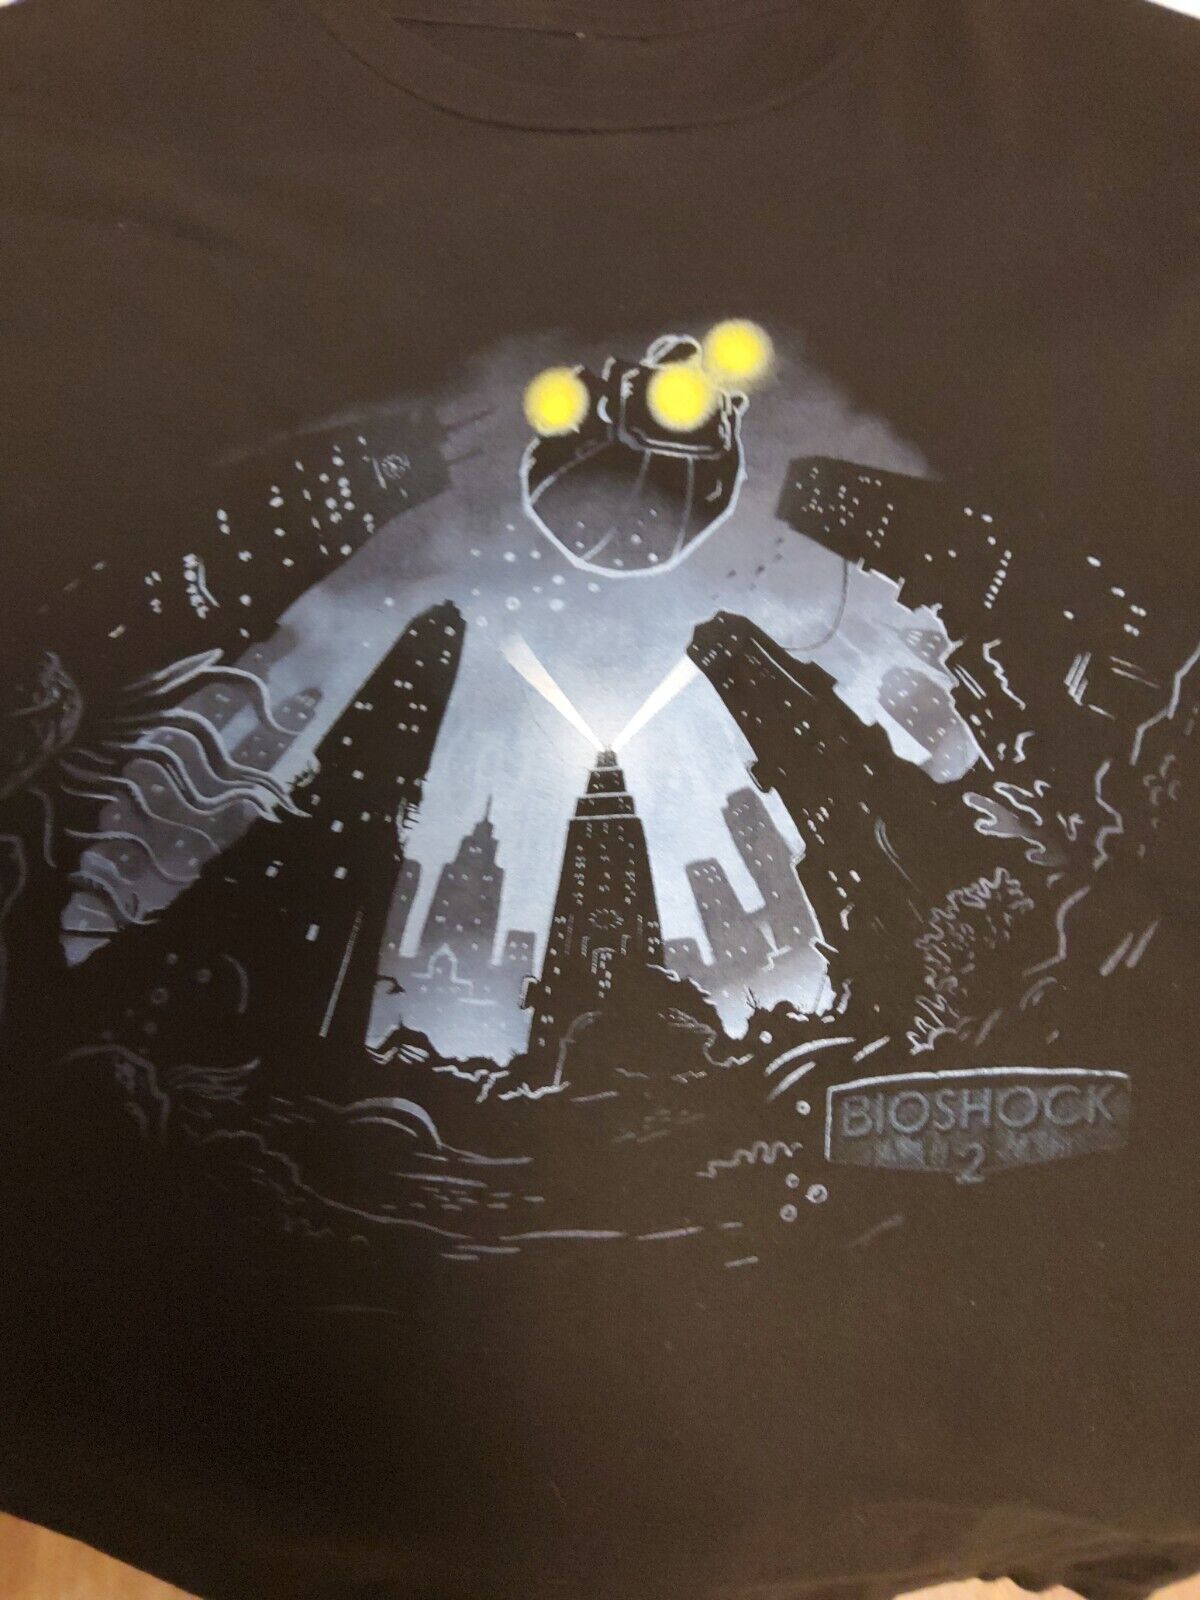 BioShock 2 Small Black Graphic T-Shirt